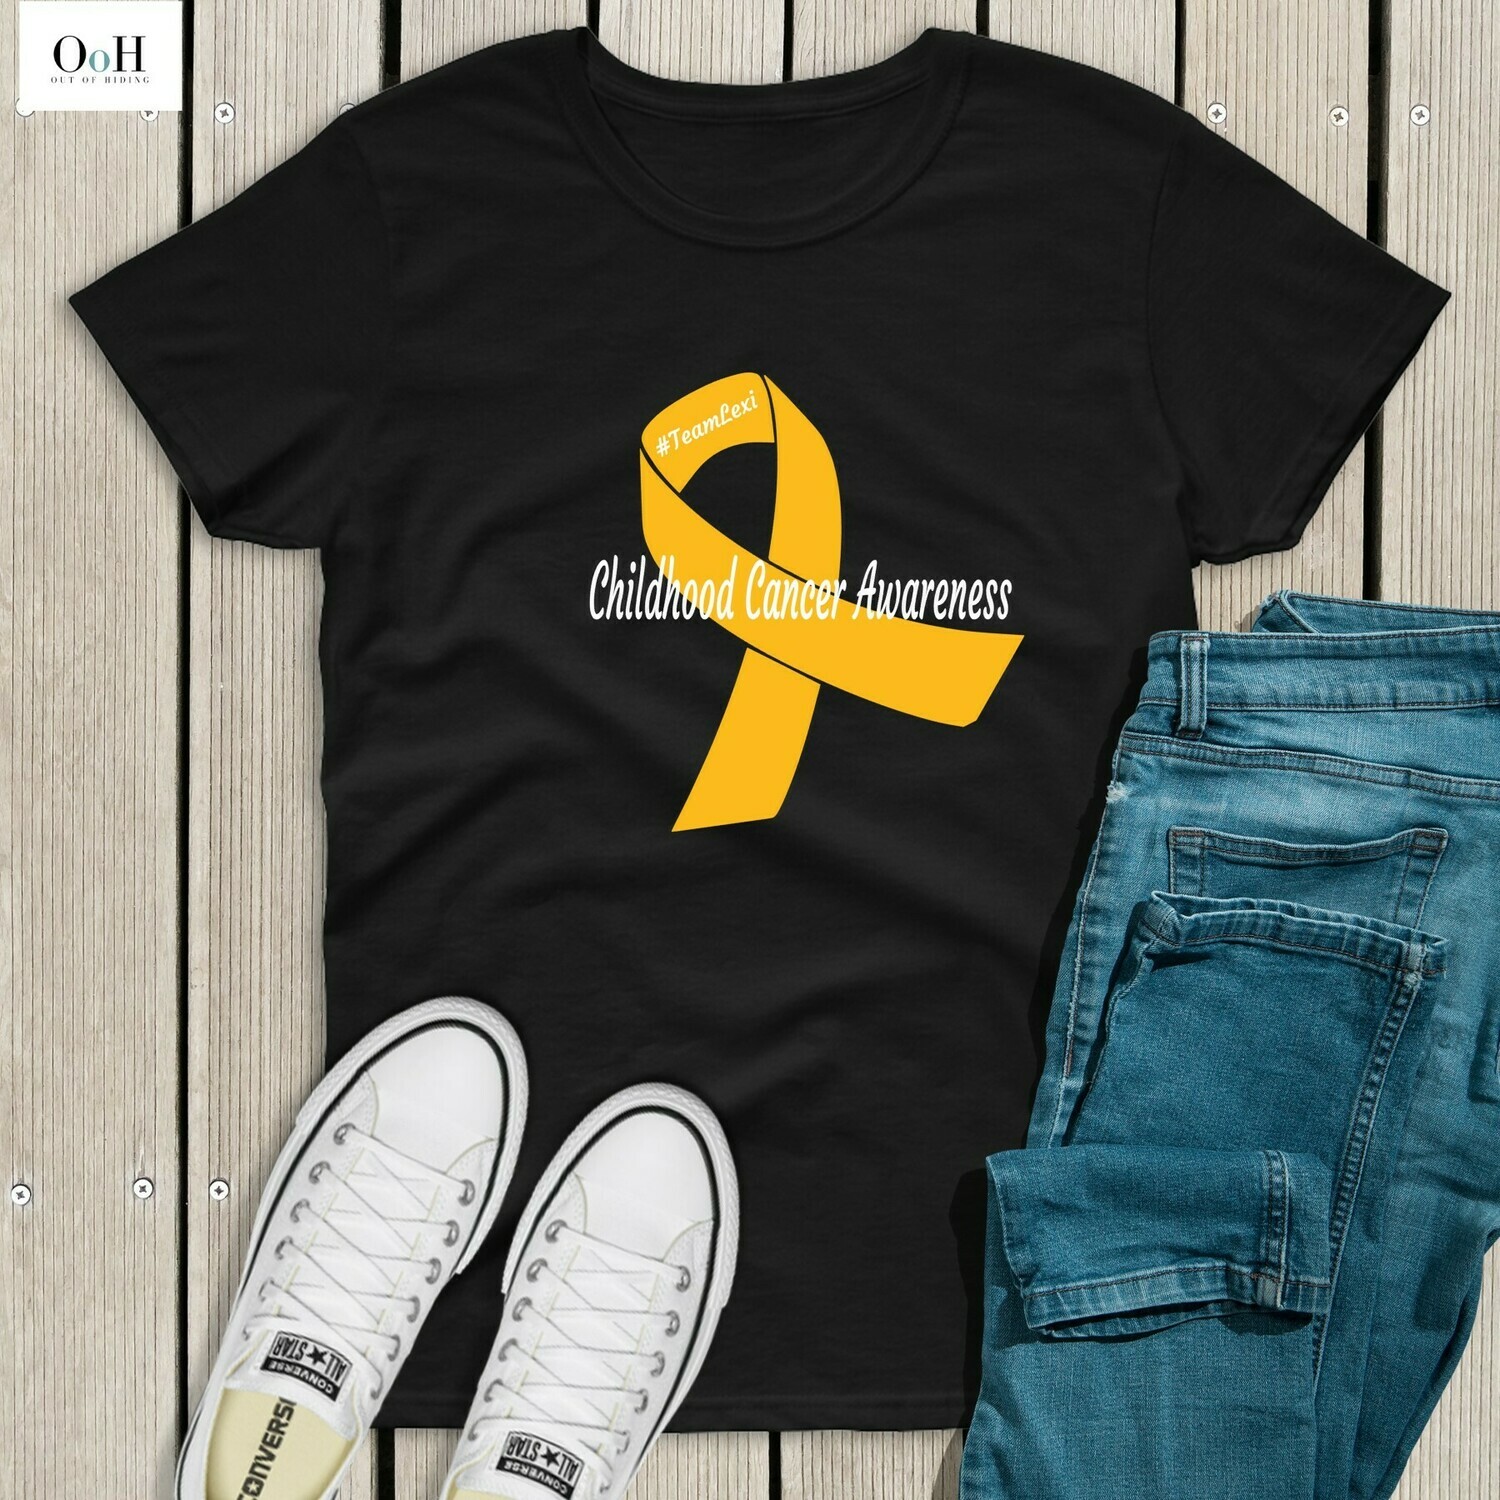 Childhood Cancer Awareness - #TeamLexi